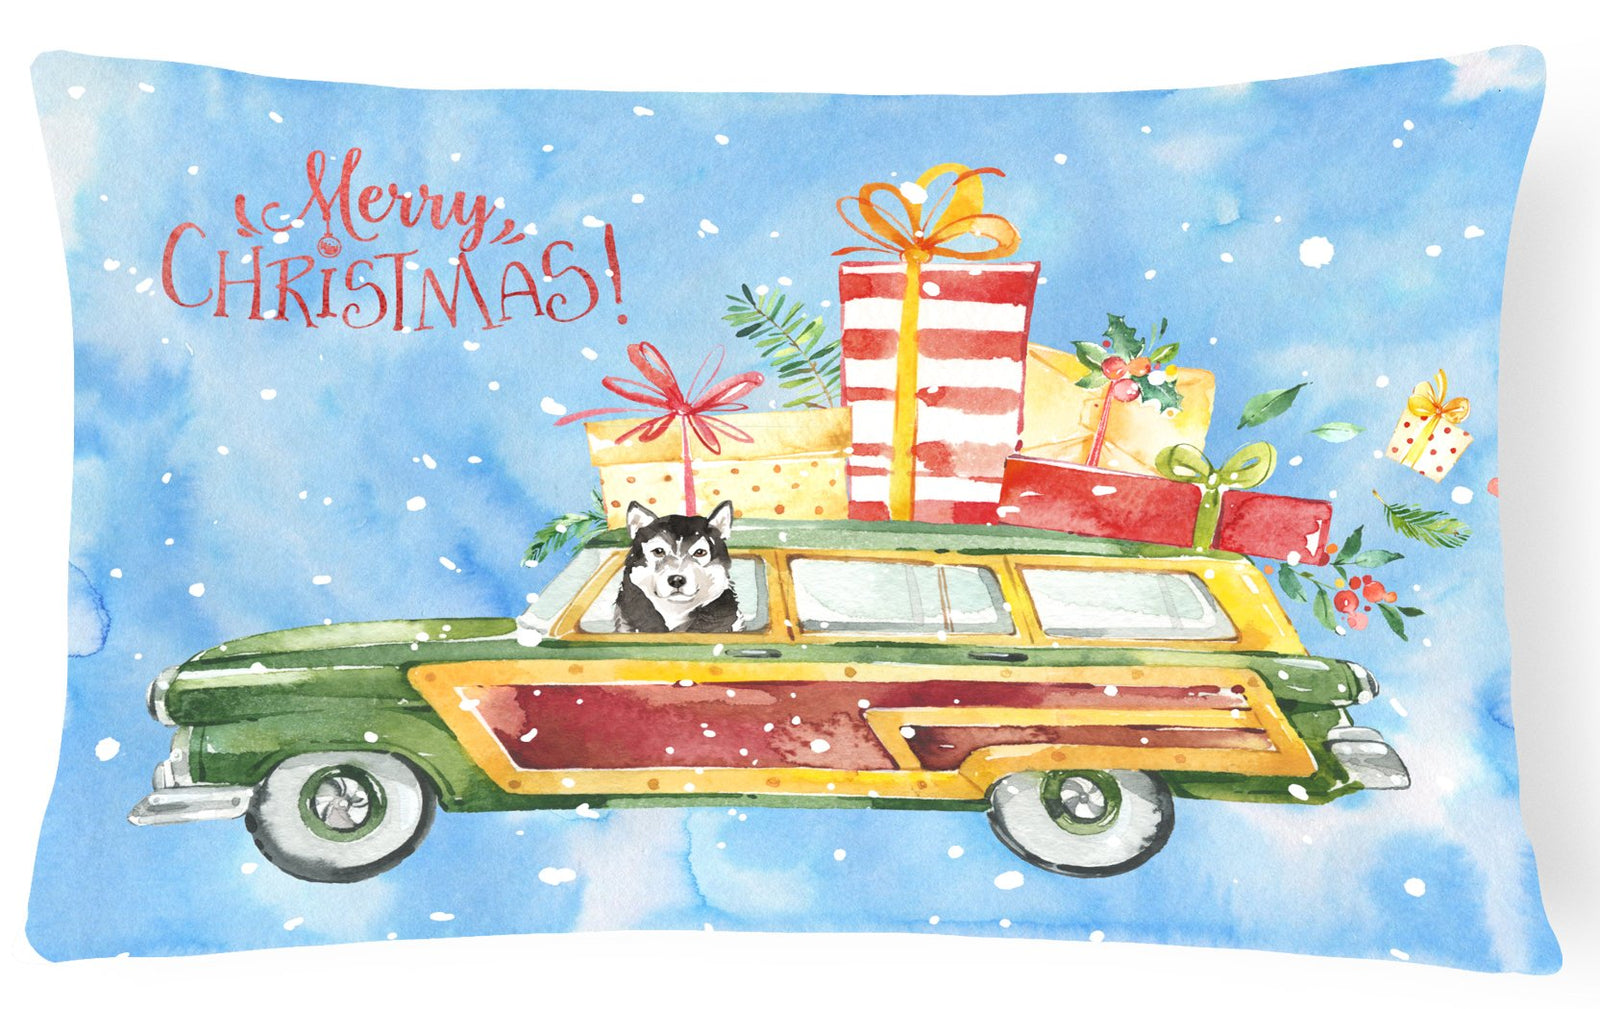 Merry Christmas Alaskan Malamute Canvas Fabric Decorative Pillow CK2413PW1216 by Caroline's Treasures